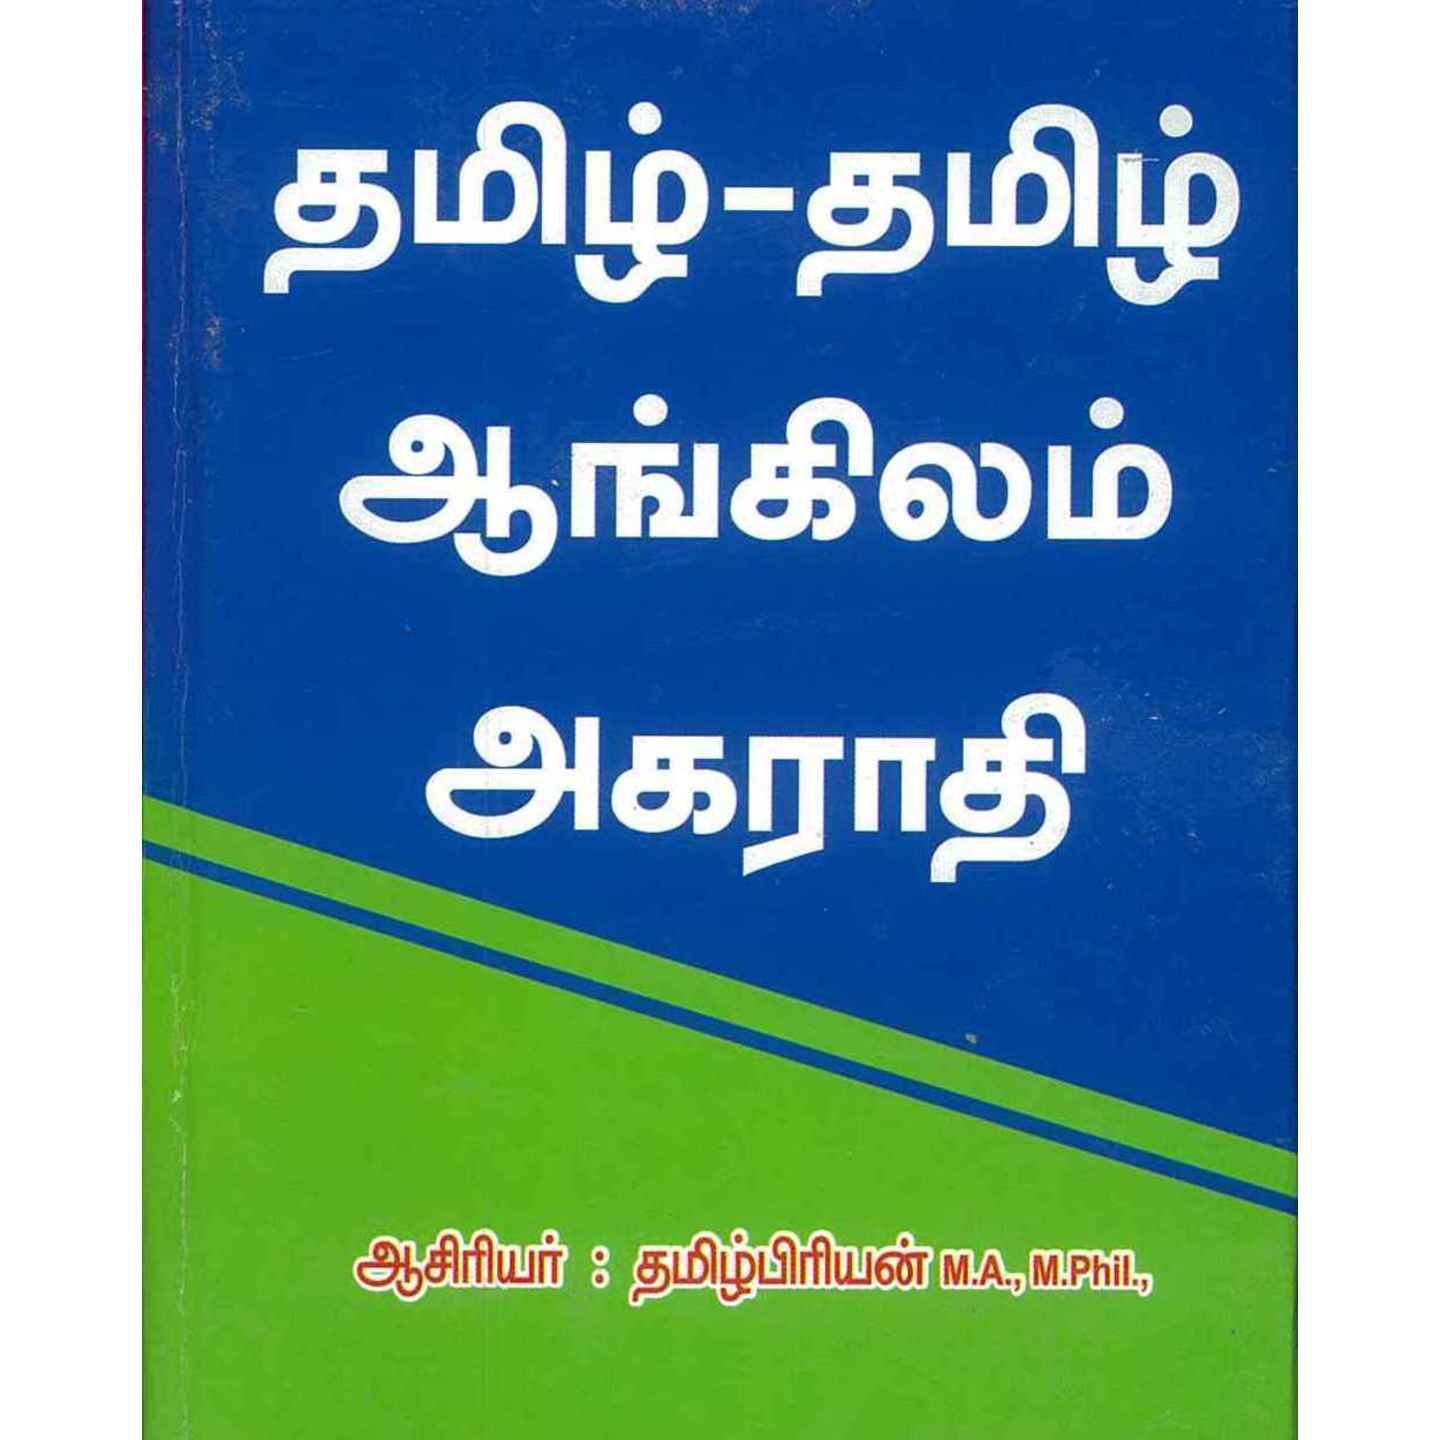 Tamil-Tamil-English Dictionary